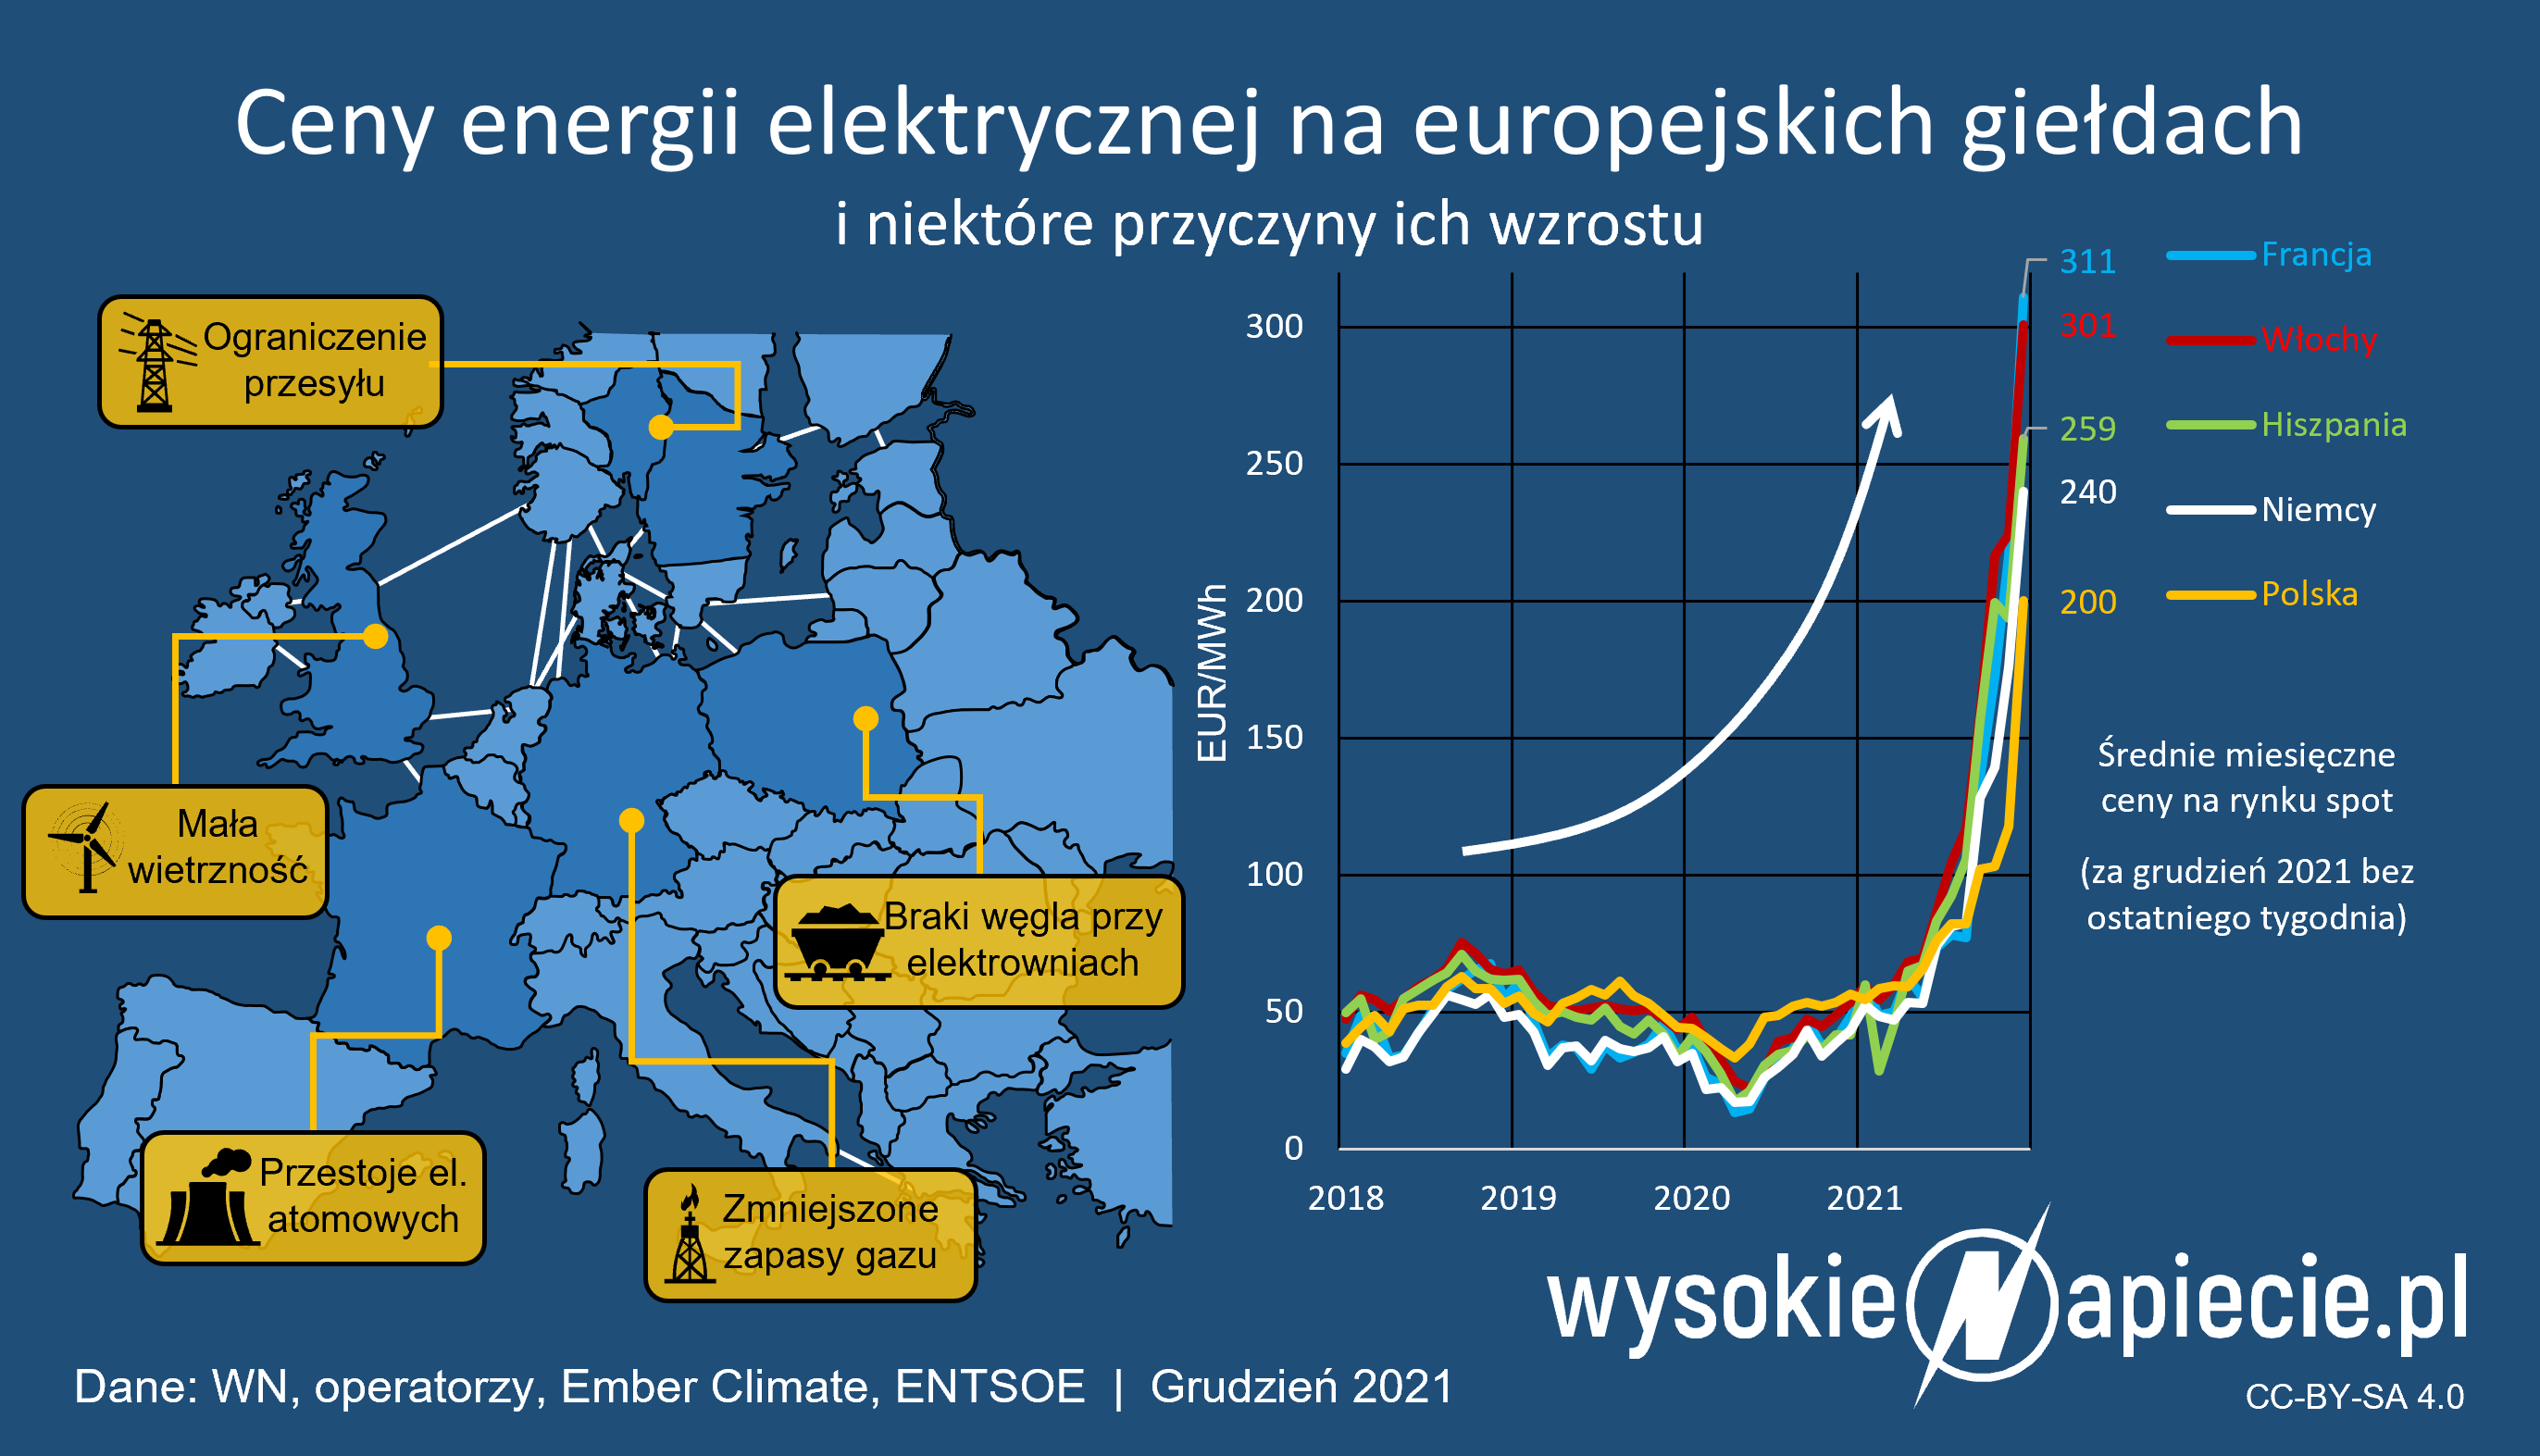 https://wysokienapiecie.pl/wp-content/uploads/2021/12/ceny_energii_europa_2021_12.png